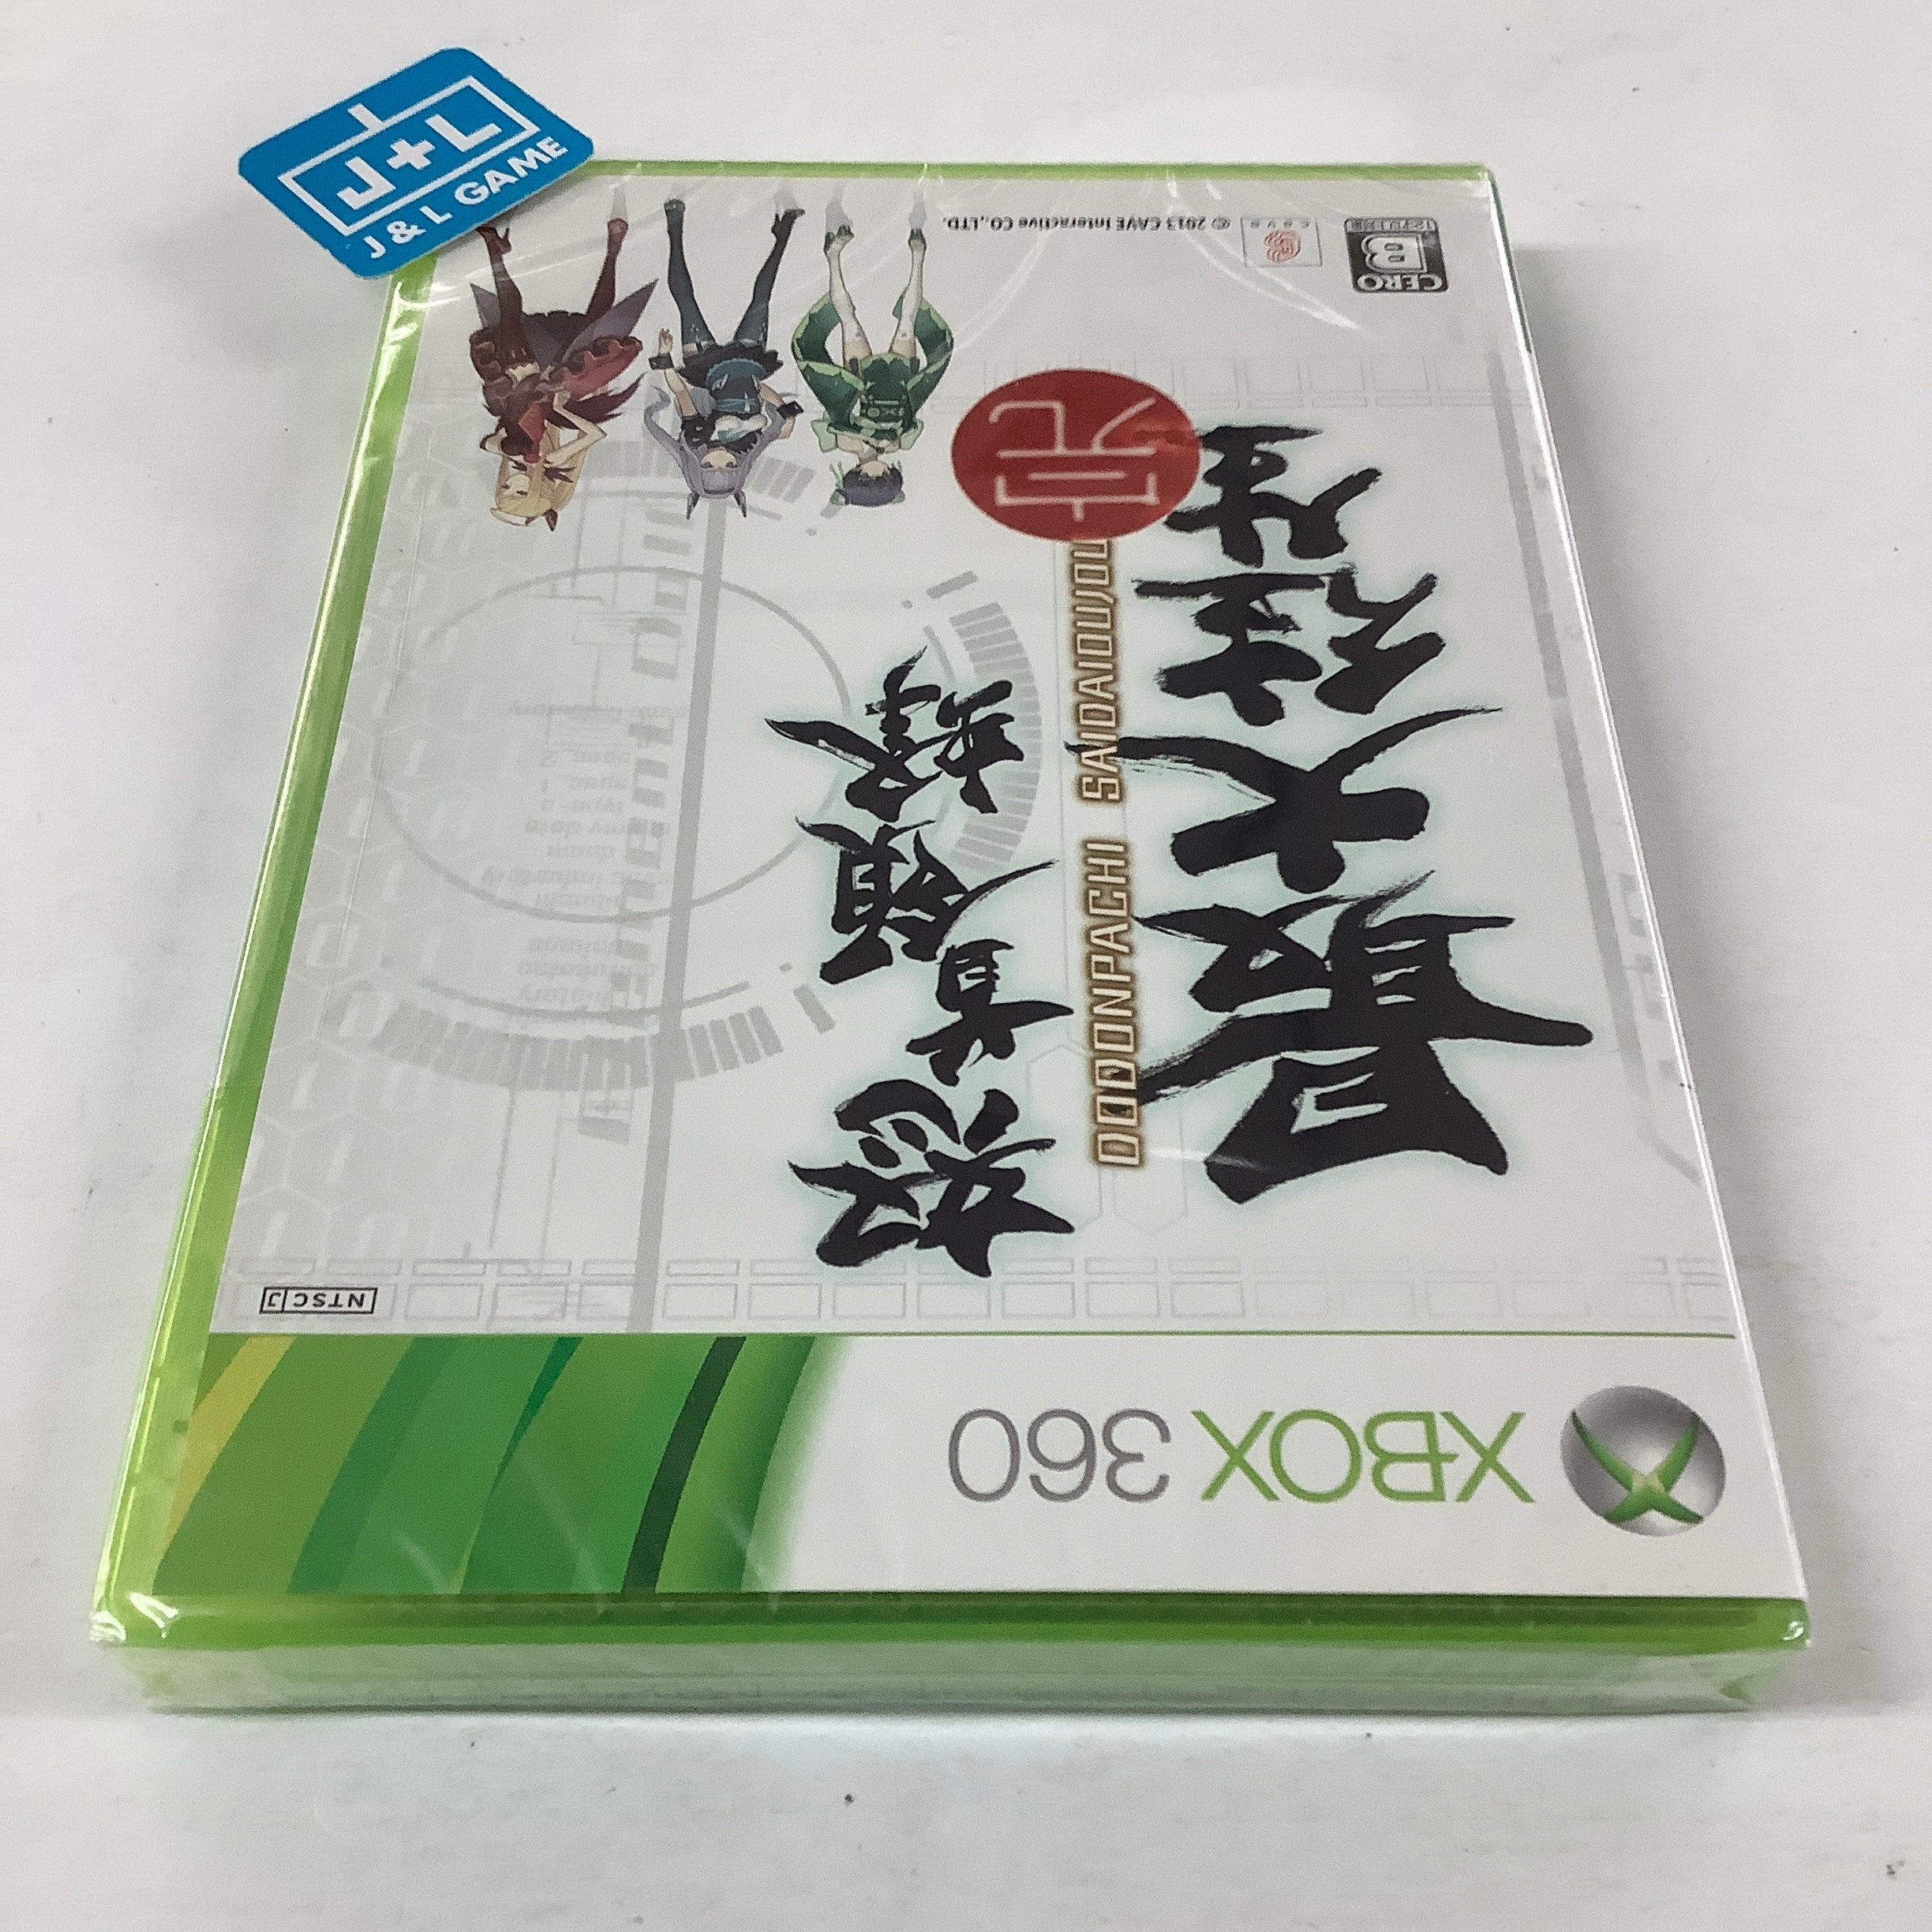 DoDonPachi Saidaioujou - Xbox 360 (Japanese Import) Video Games Cave   